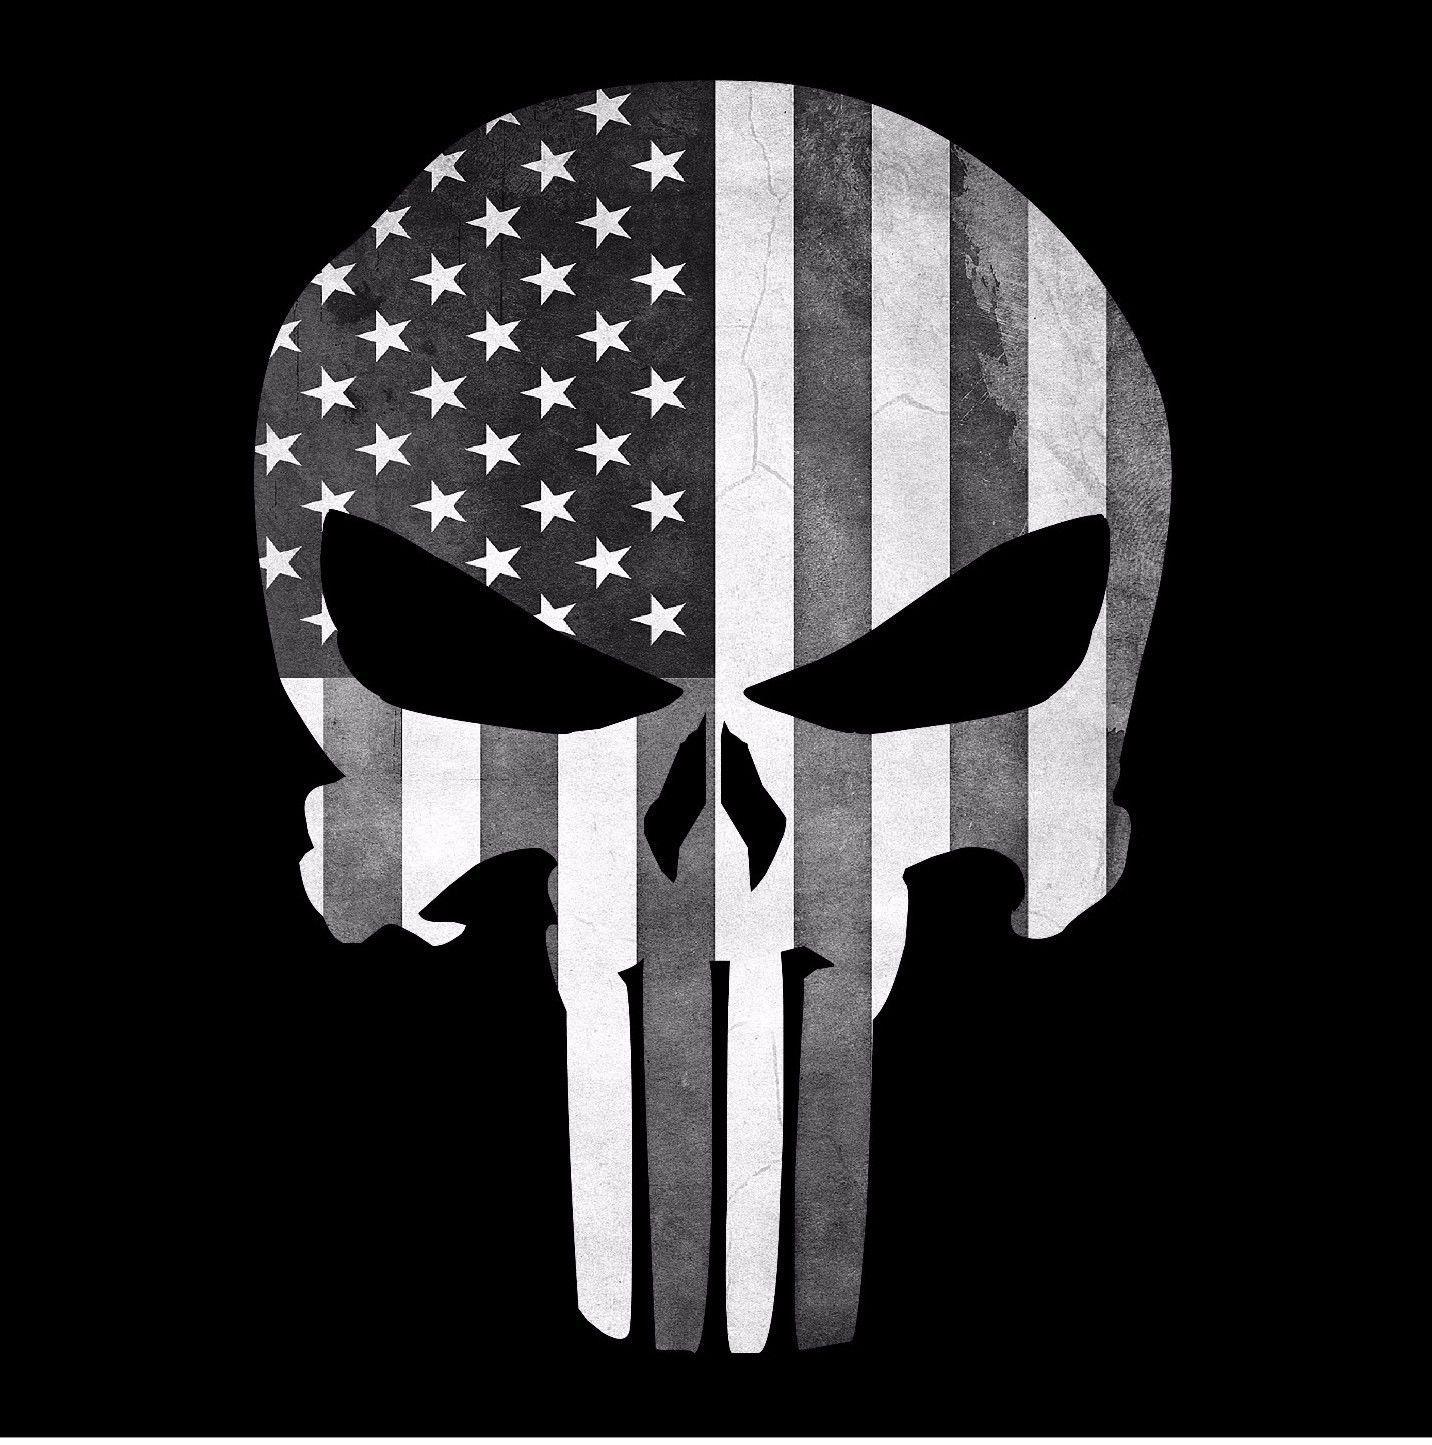 Black and White American Flag Logo - Punisher Skull American Flag (Black and White) Decal Sticker Graphic ...